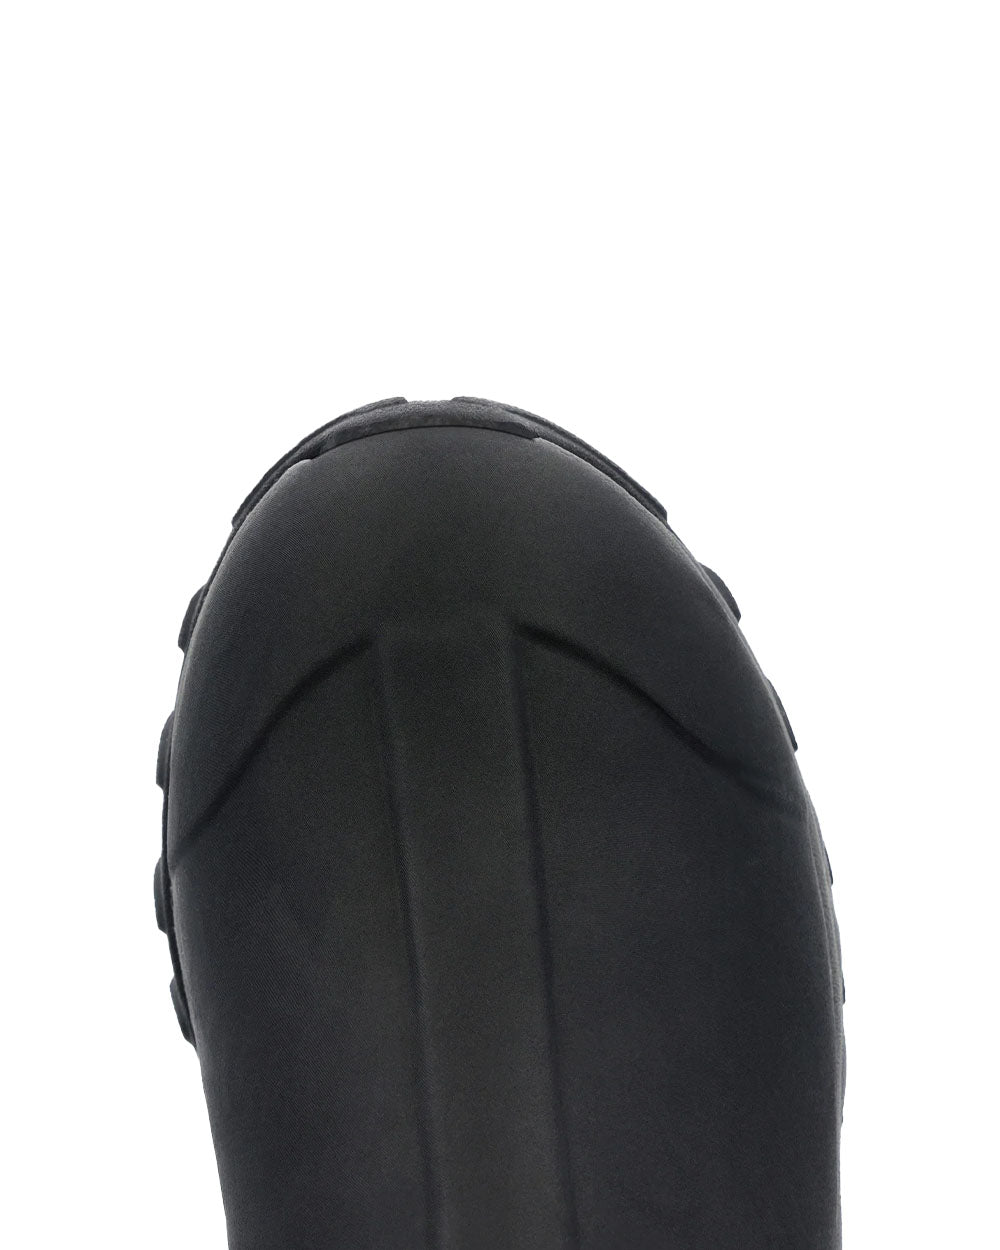 Black Plaid Print Muck Boots Womens Artic Sport II Tall Wellington Toe on White background 